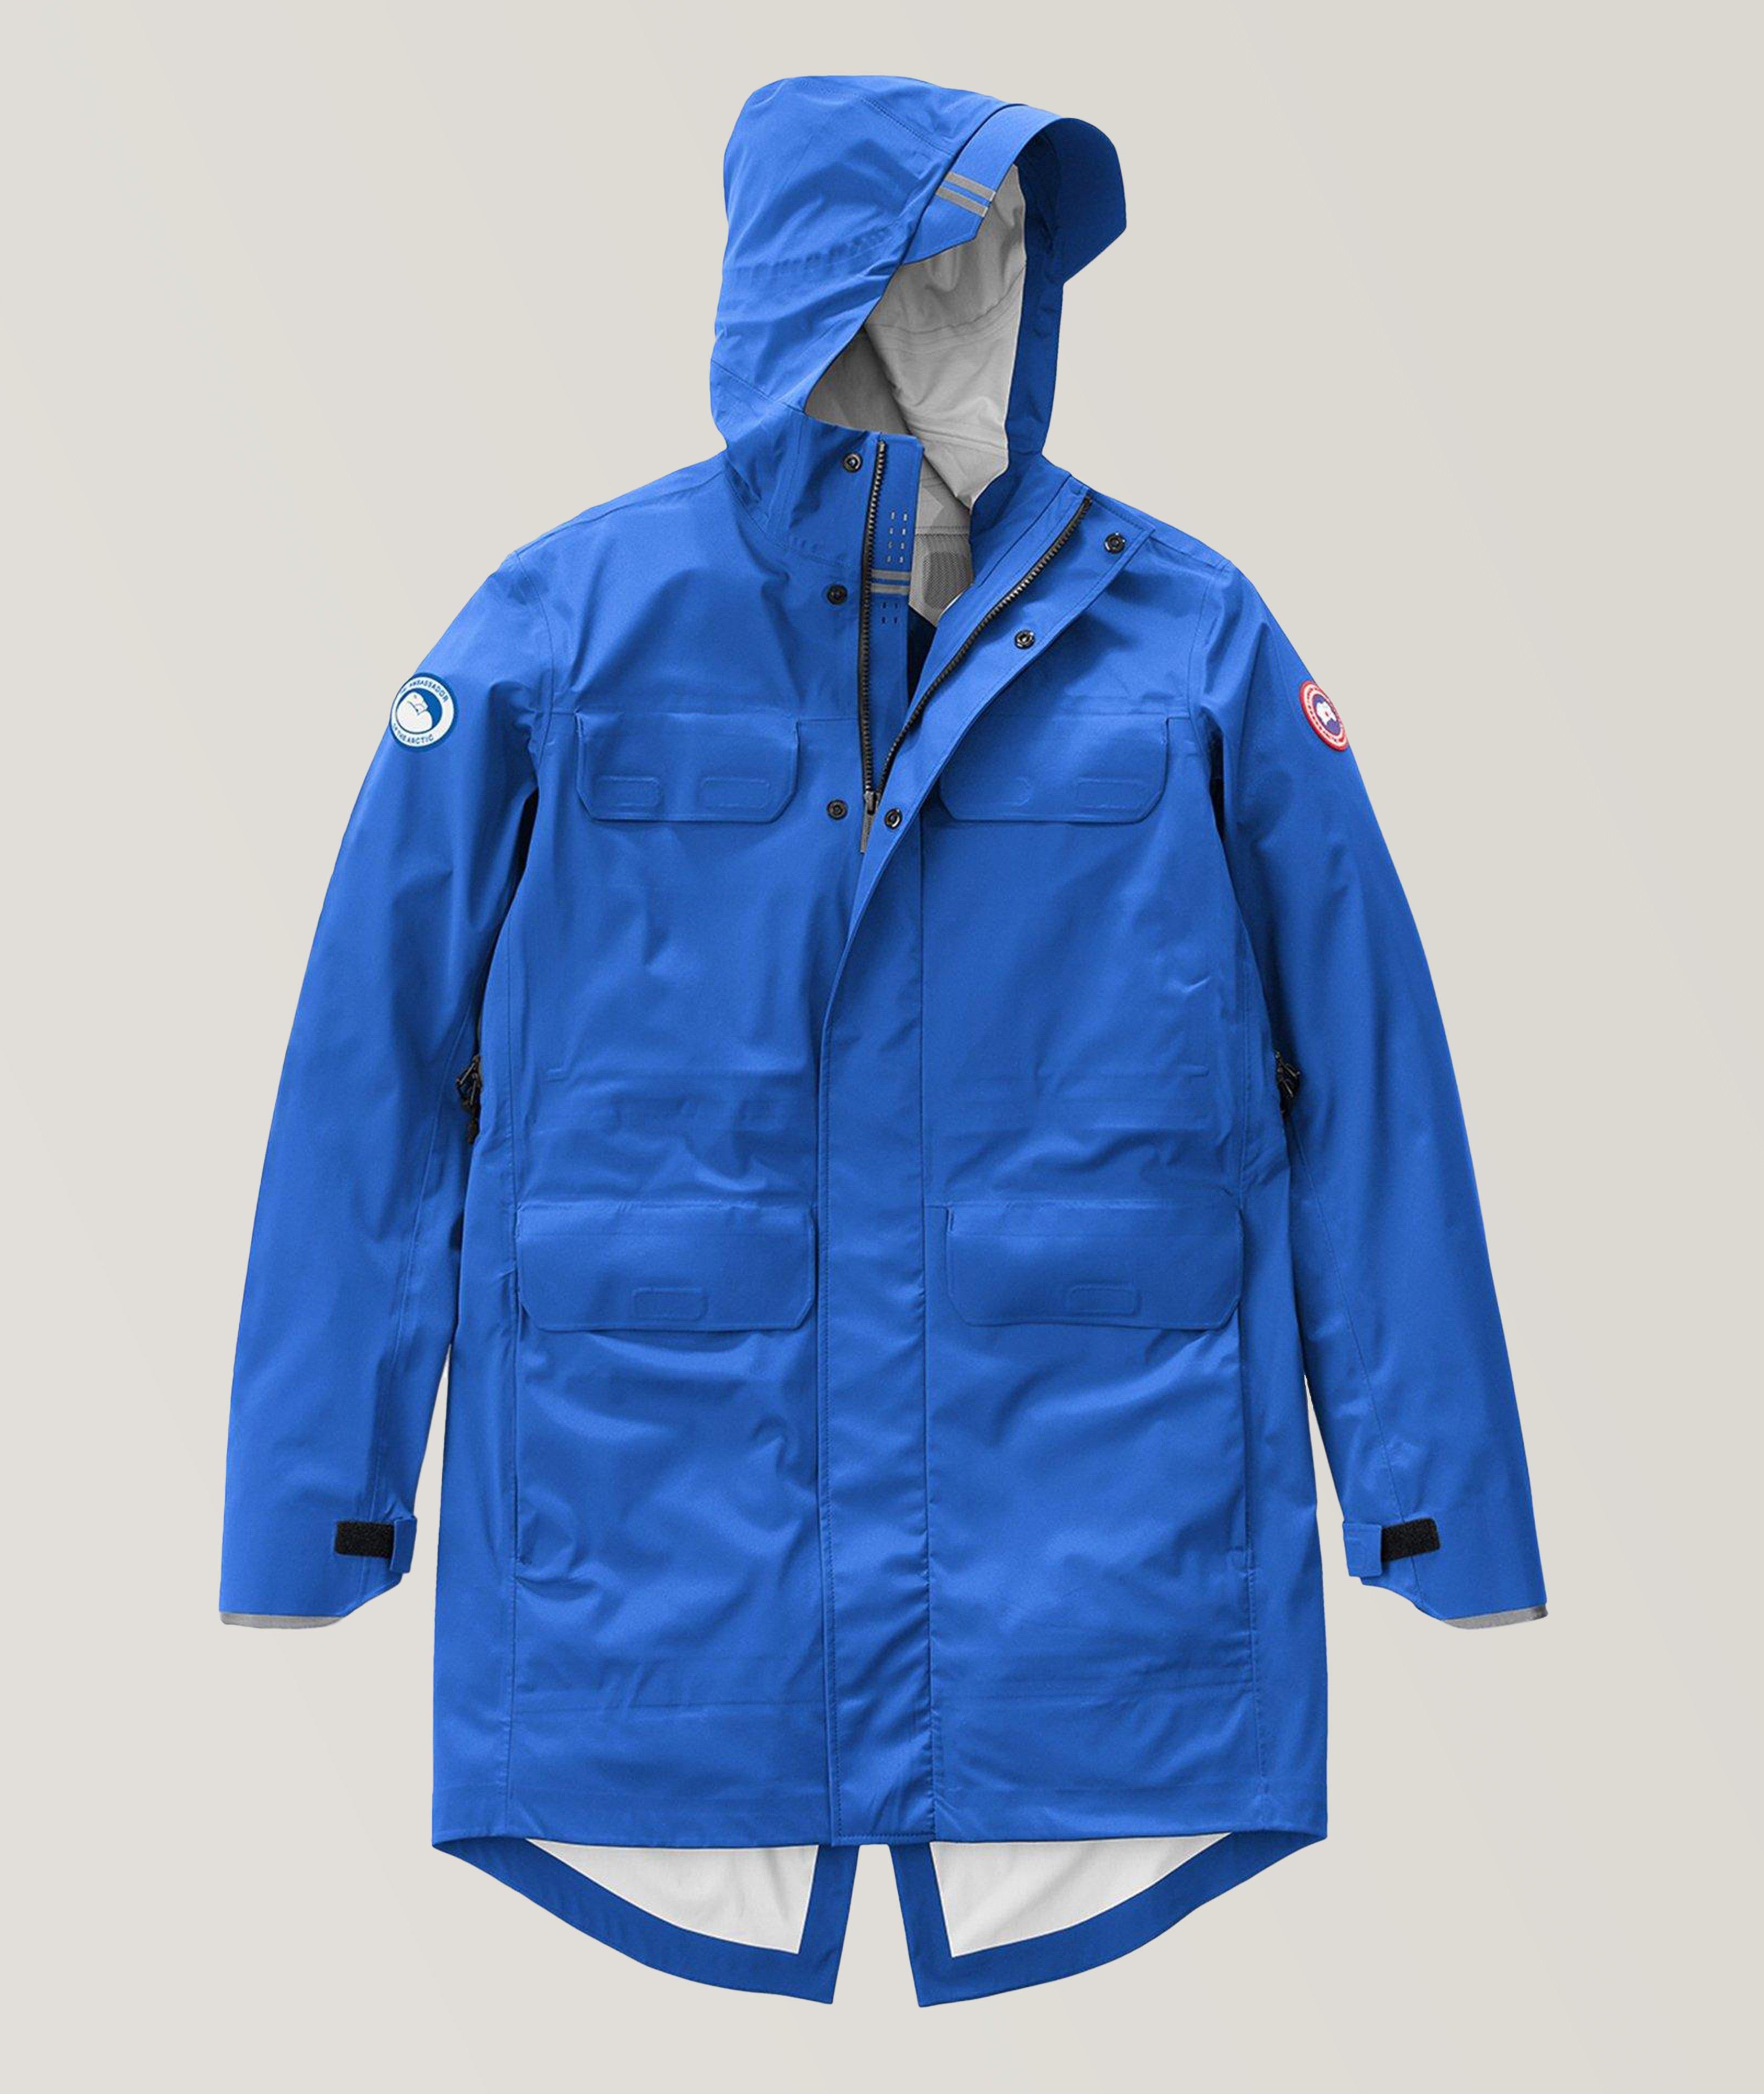 PBI Waterproof Seawolf Jacket image 0